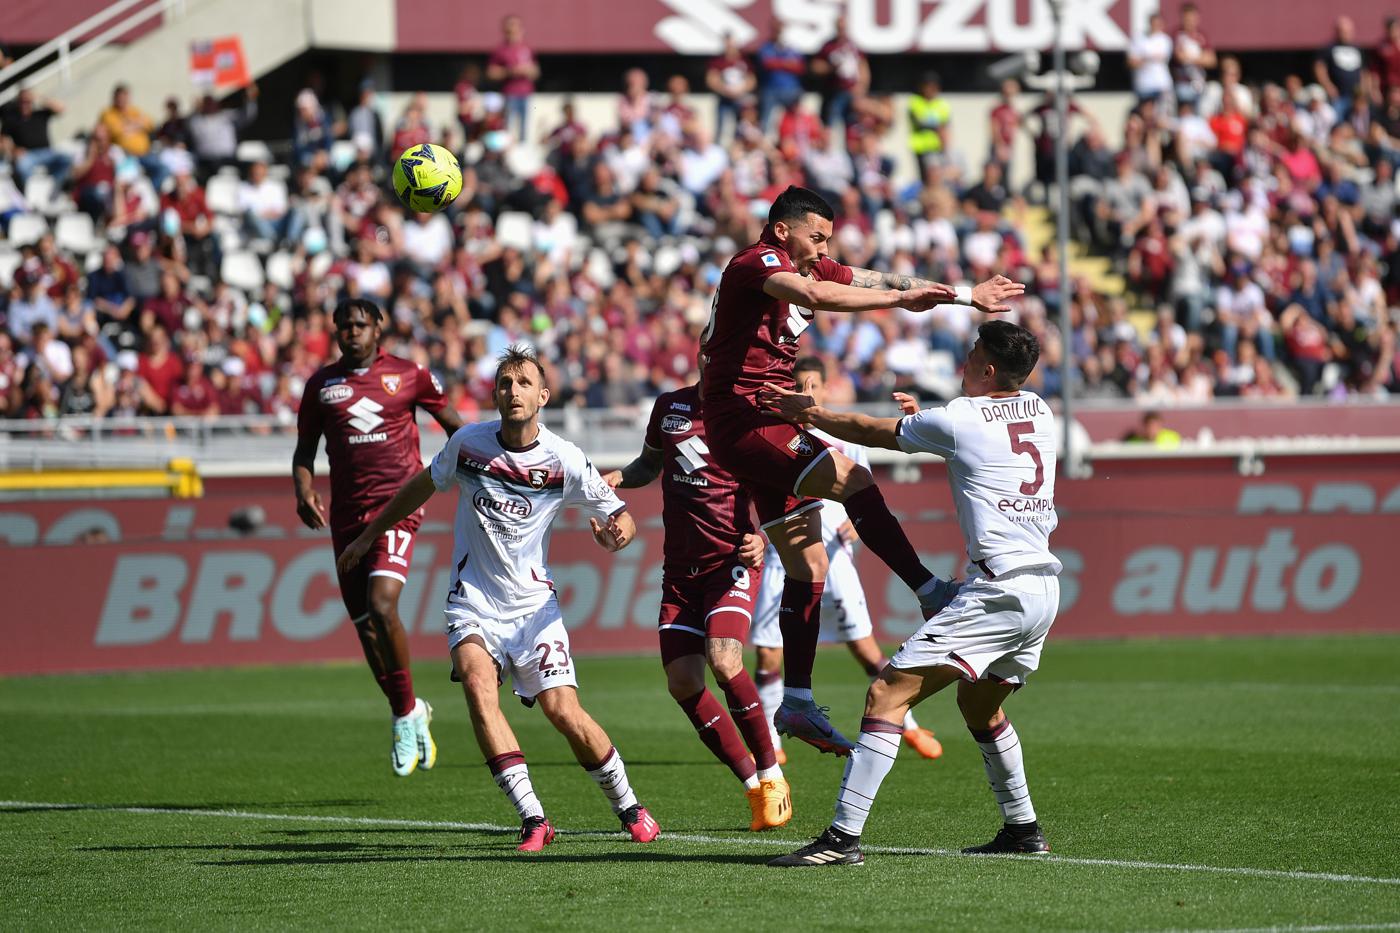 statistics Torino - Salernitana - 1:1. Italian Championship, round 30. Match review,